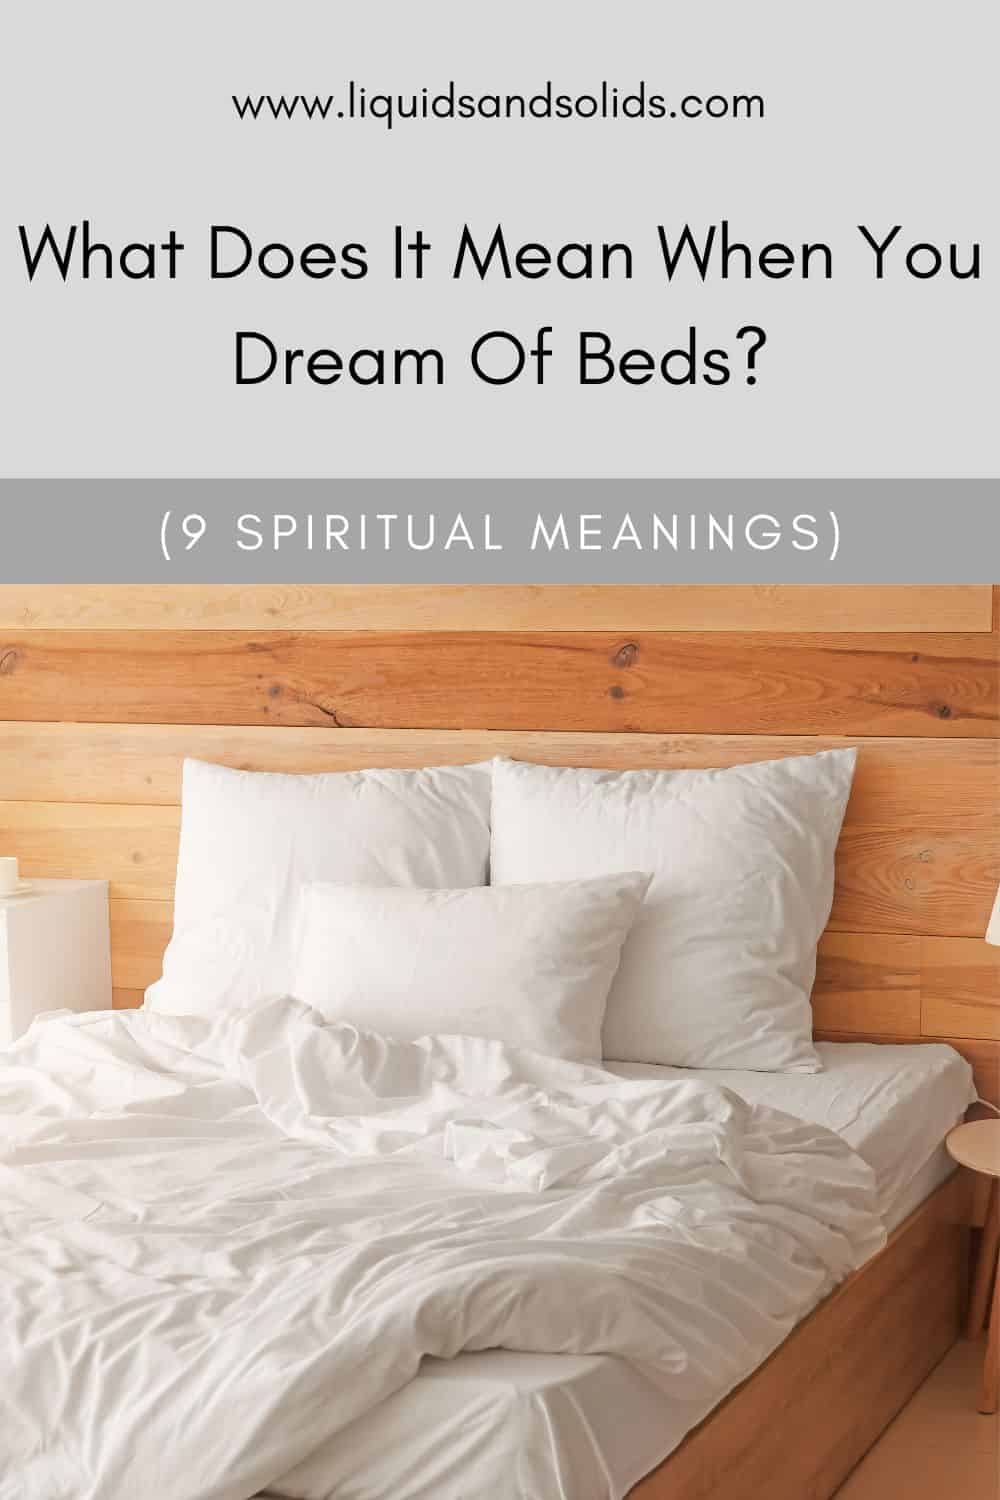 What Do Beds Symbolize?